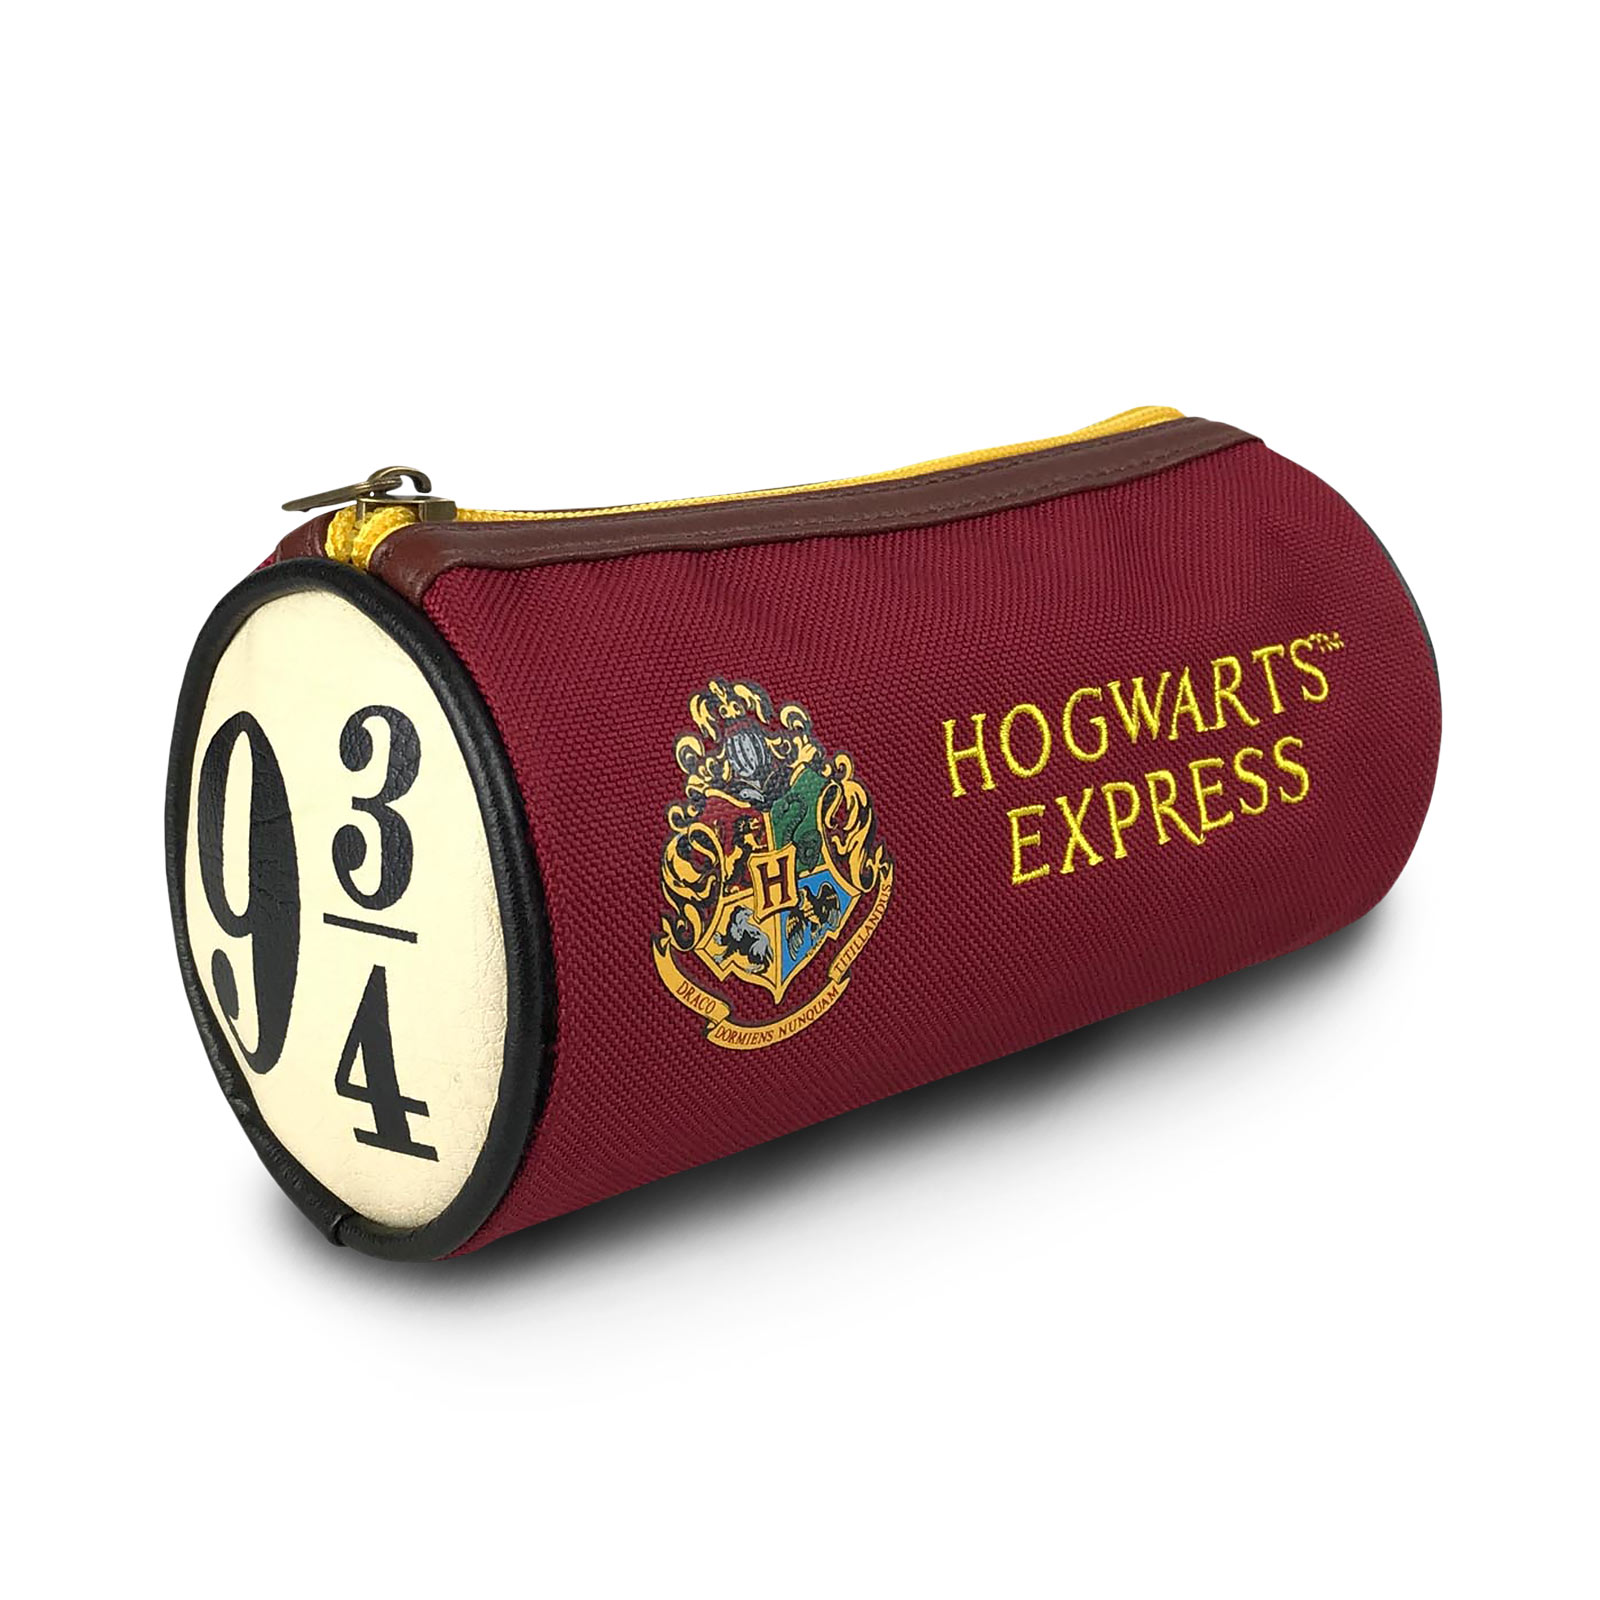 Harry Potter - Hogwarts Express 9 3/4 Cosmetic Bag